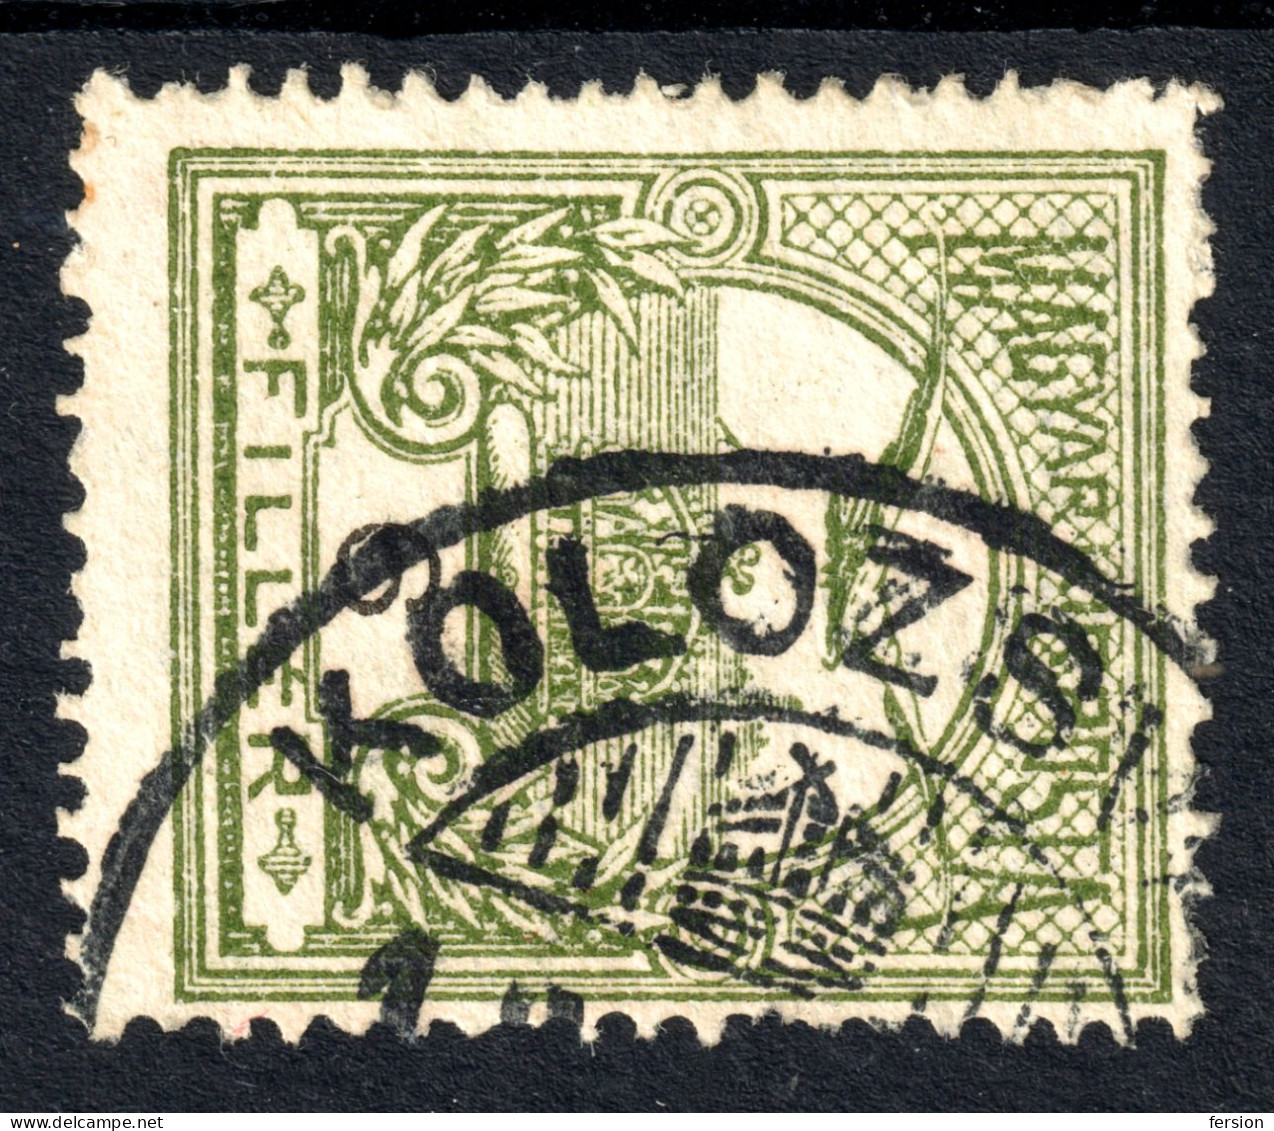 KOLOZSVÁR CLUJ-NAPOCA Postmark / TURUL Crown 1910's Hungary Romania Banat Transylvania KOLOZS County KuK K.u.K - 6 Fill - Transylvania